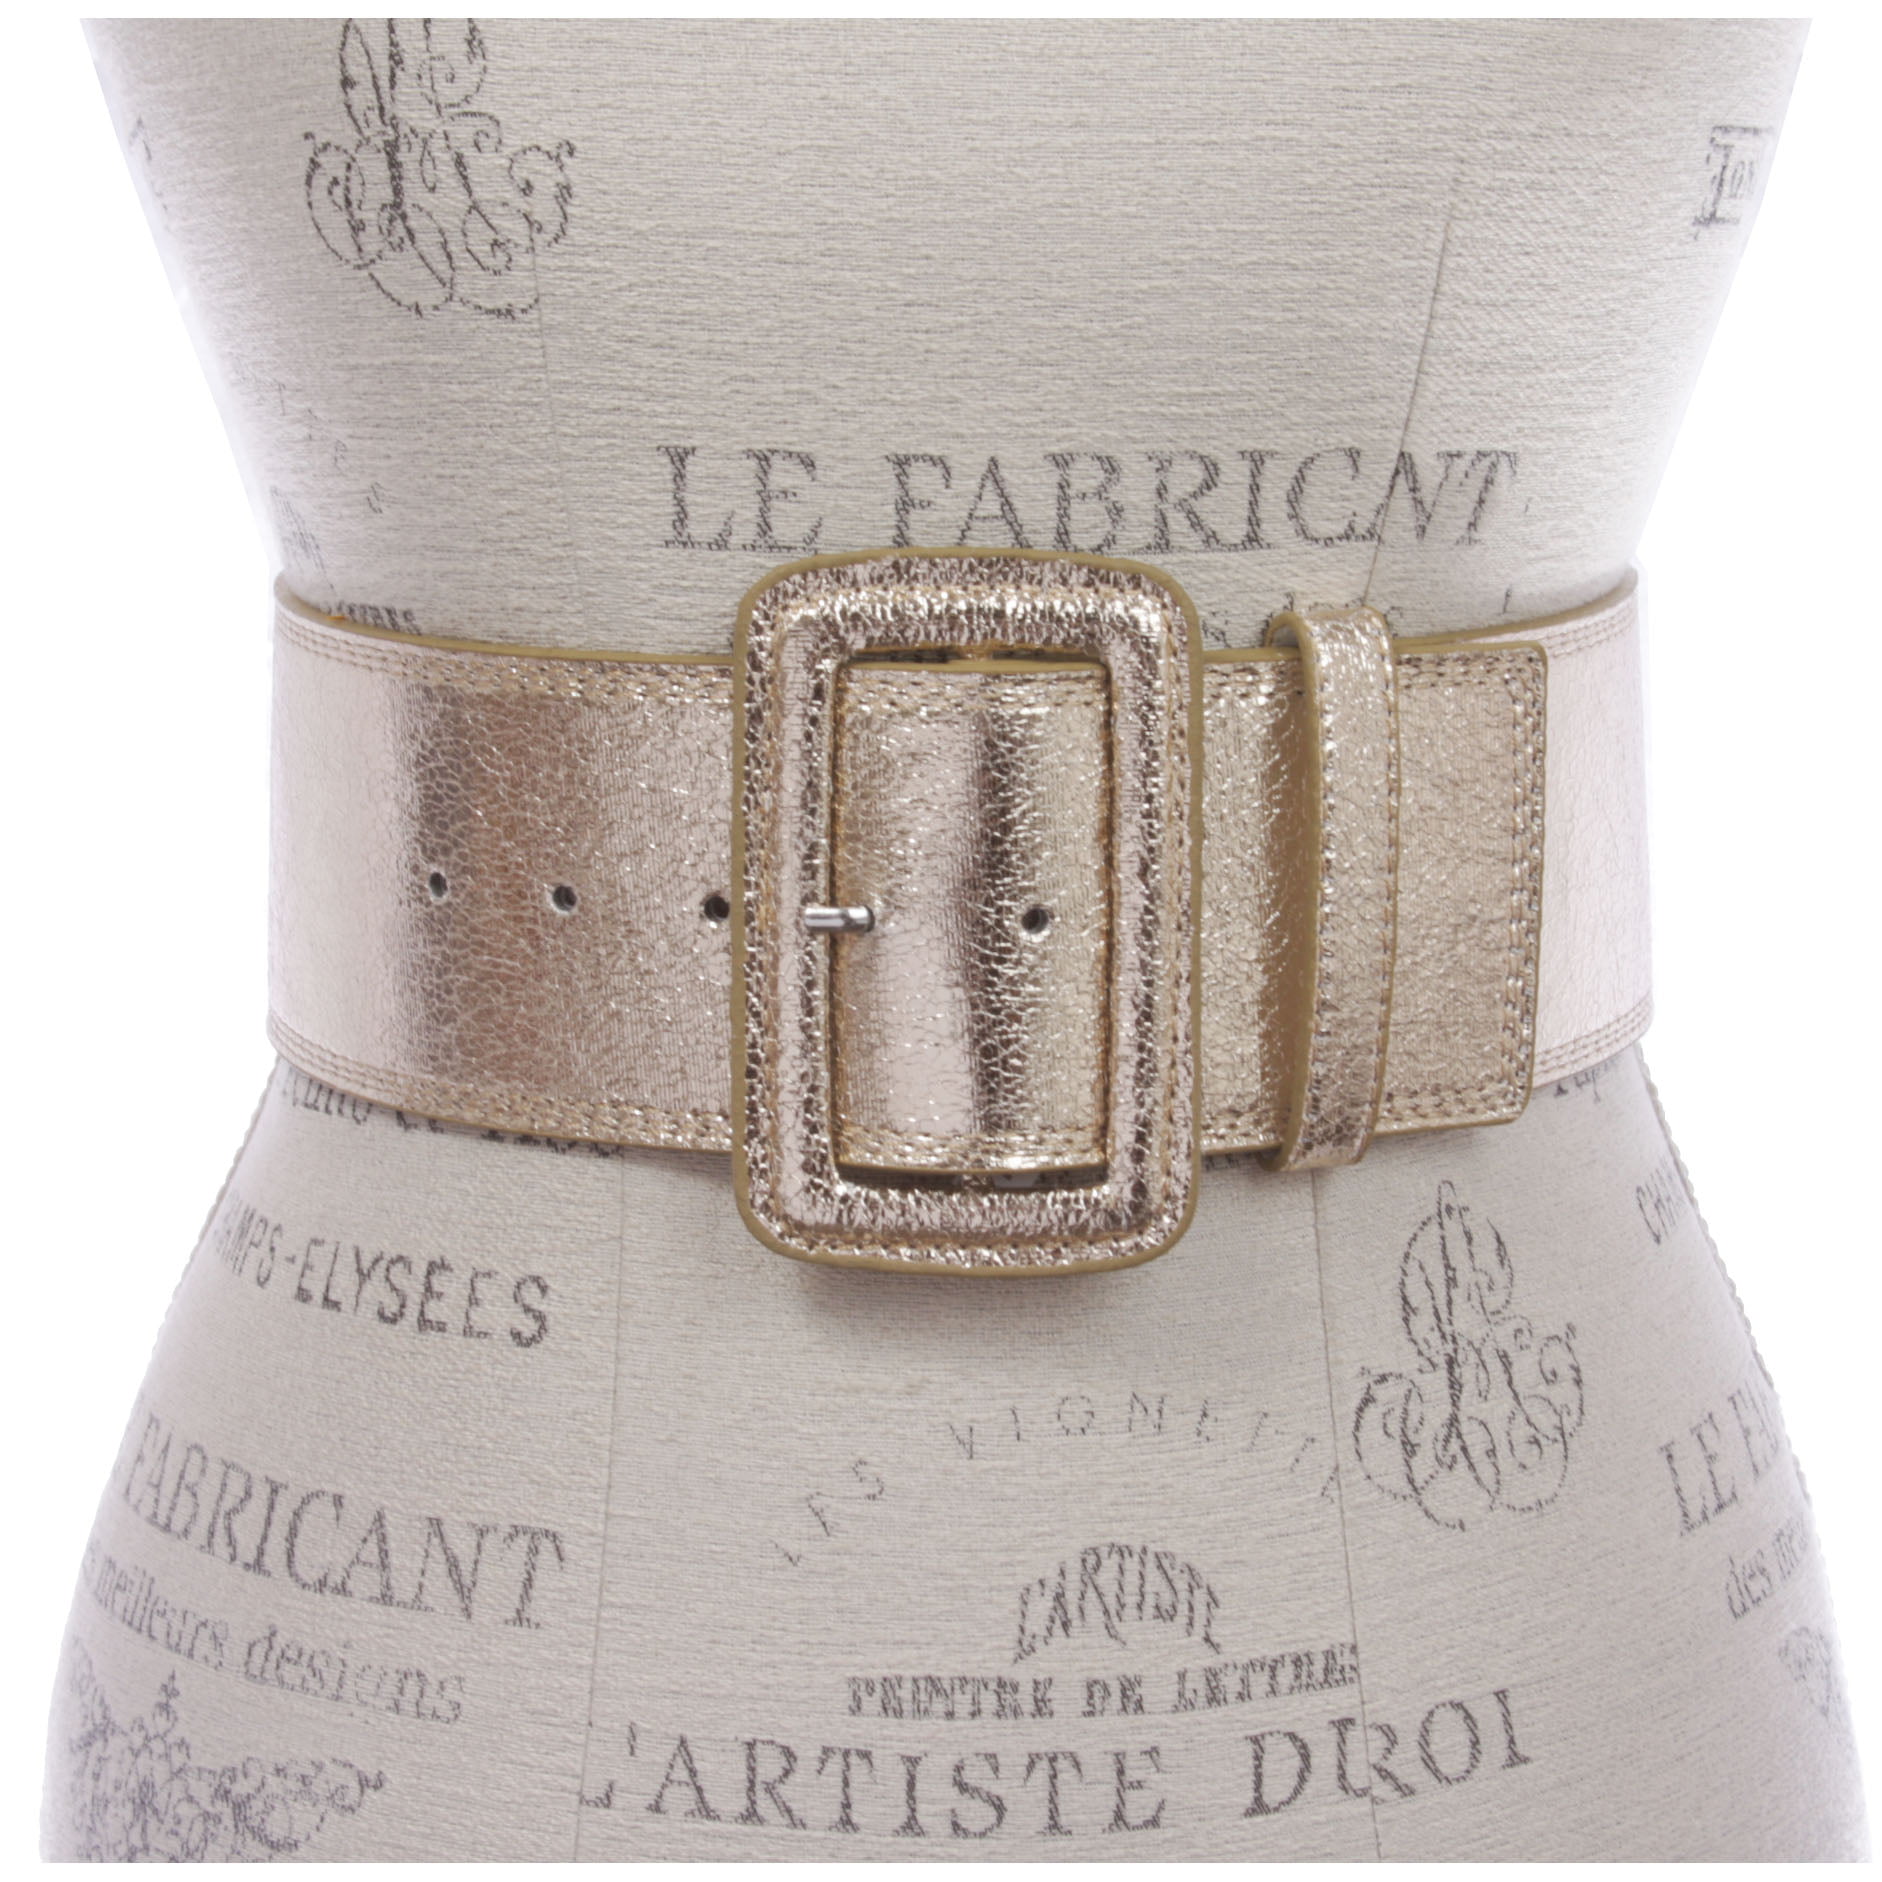 Beltiscool Women's 3 inch Wide High Waist Fashion Stitch Rectangular Leather Belt, Size: XS/Small - 28, White